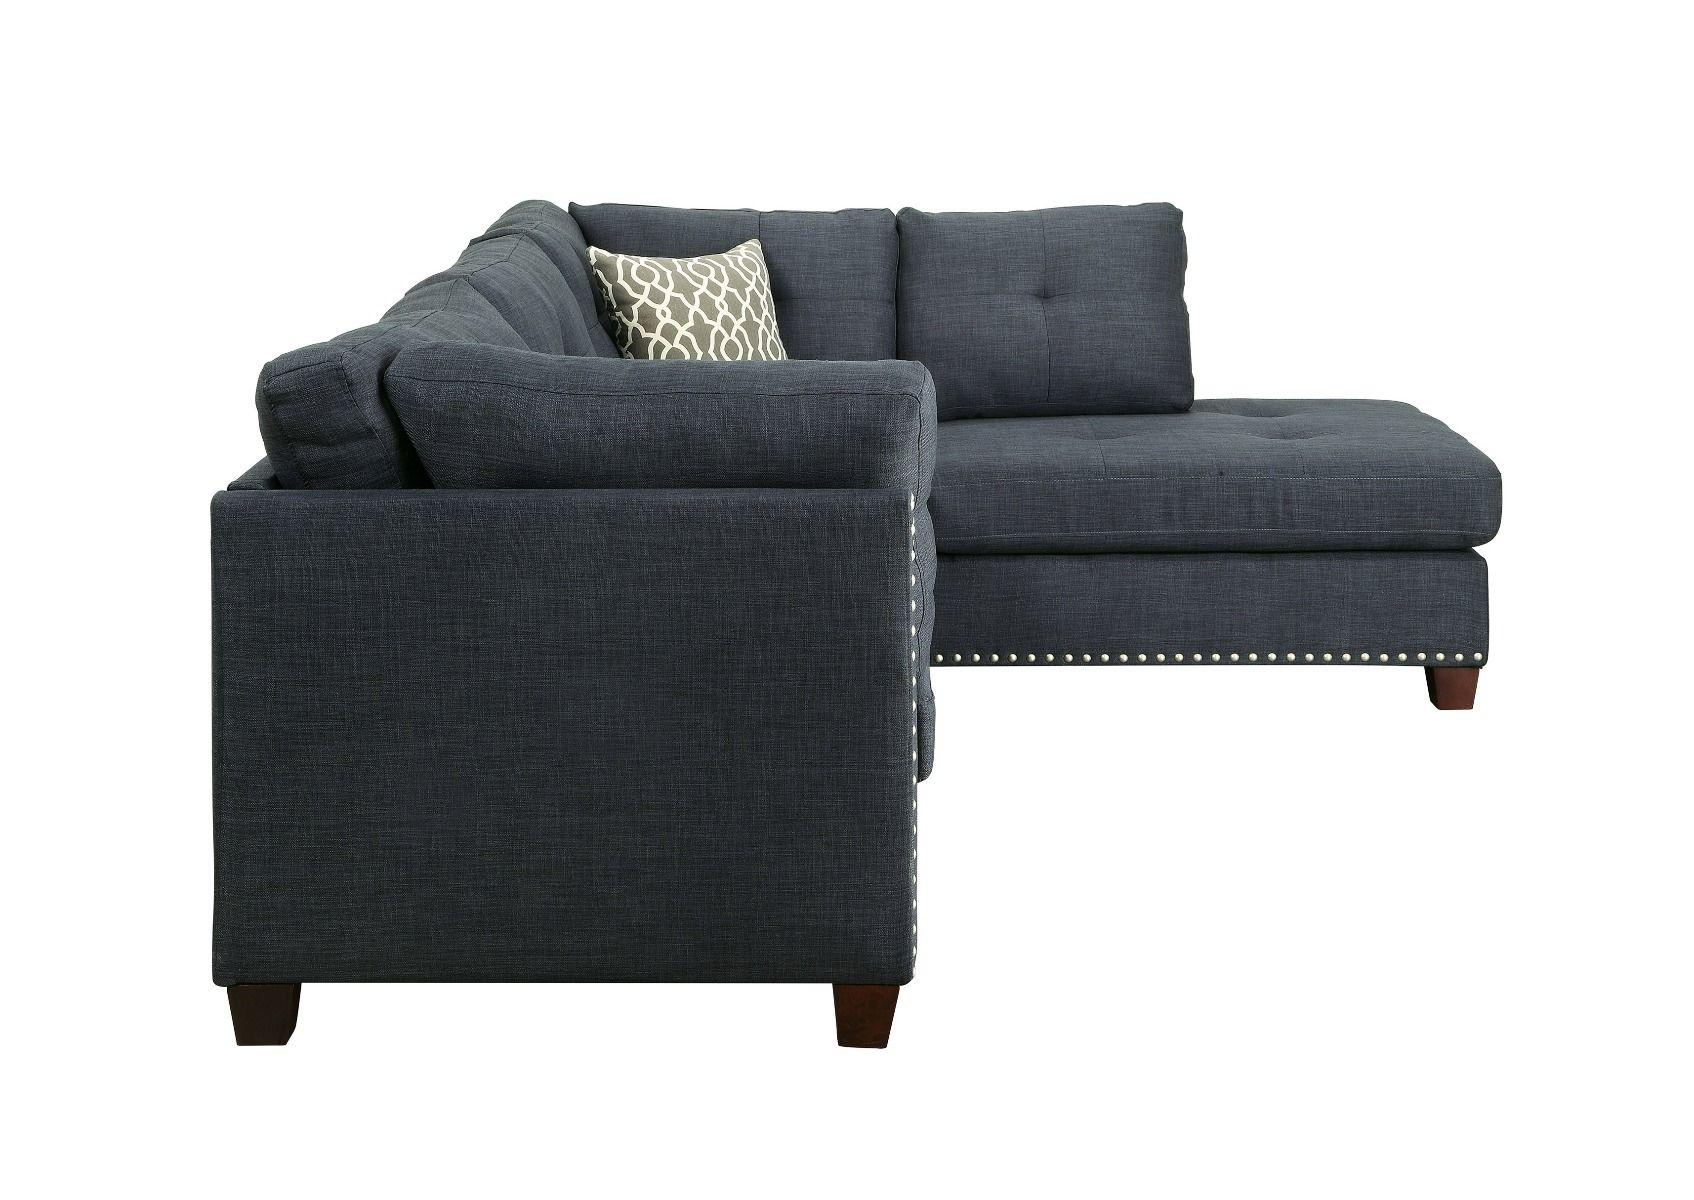 

    
Contemporary Dark Blue Linen LF Chaise Sectional Sofa & Ottoman by Acme Laurissa 54365-3pcs
